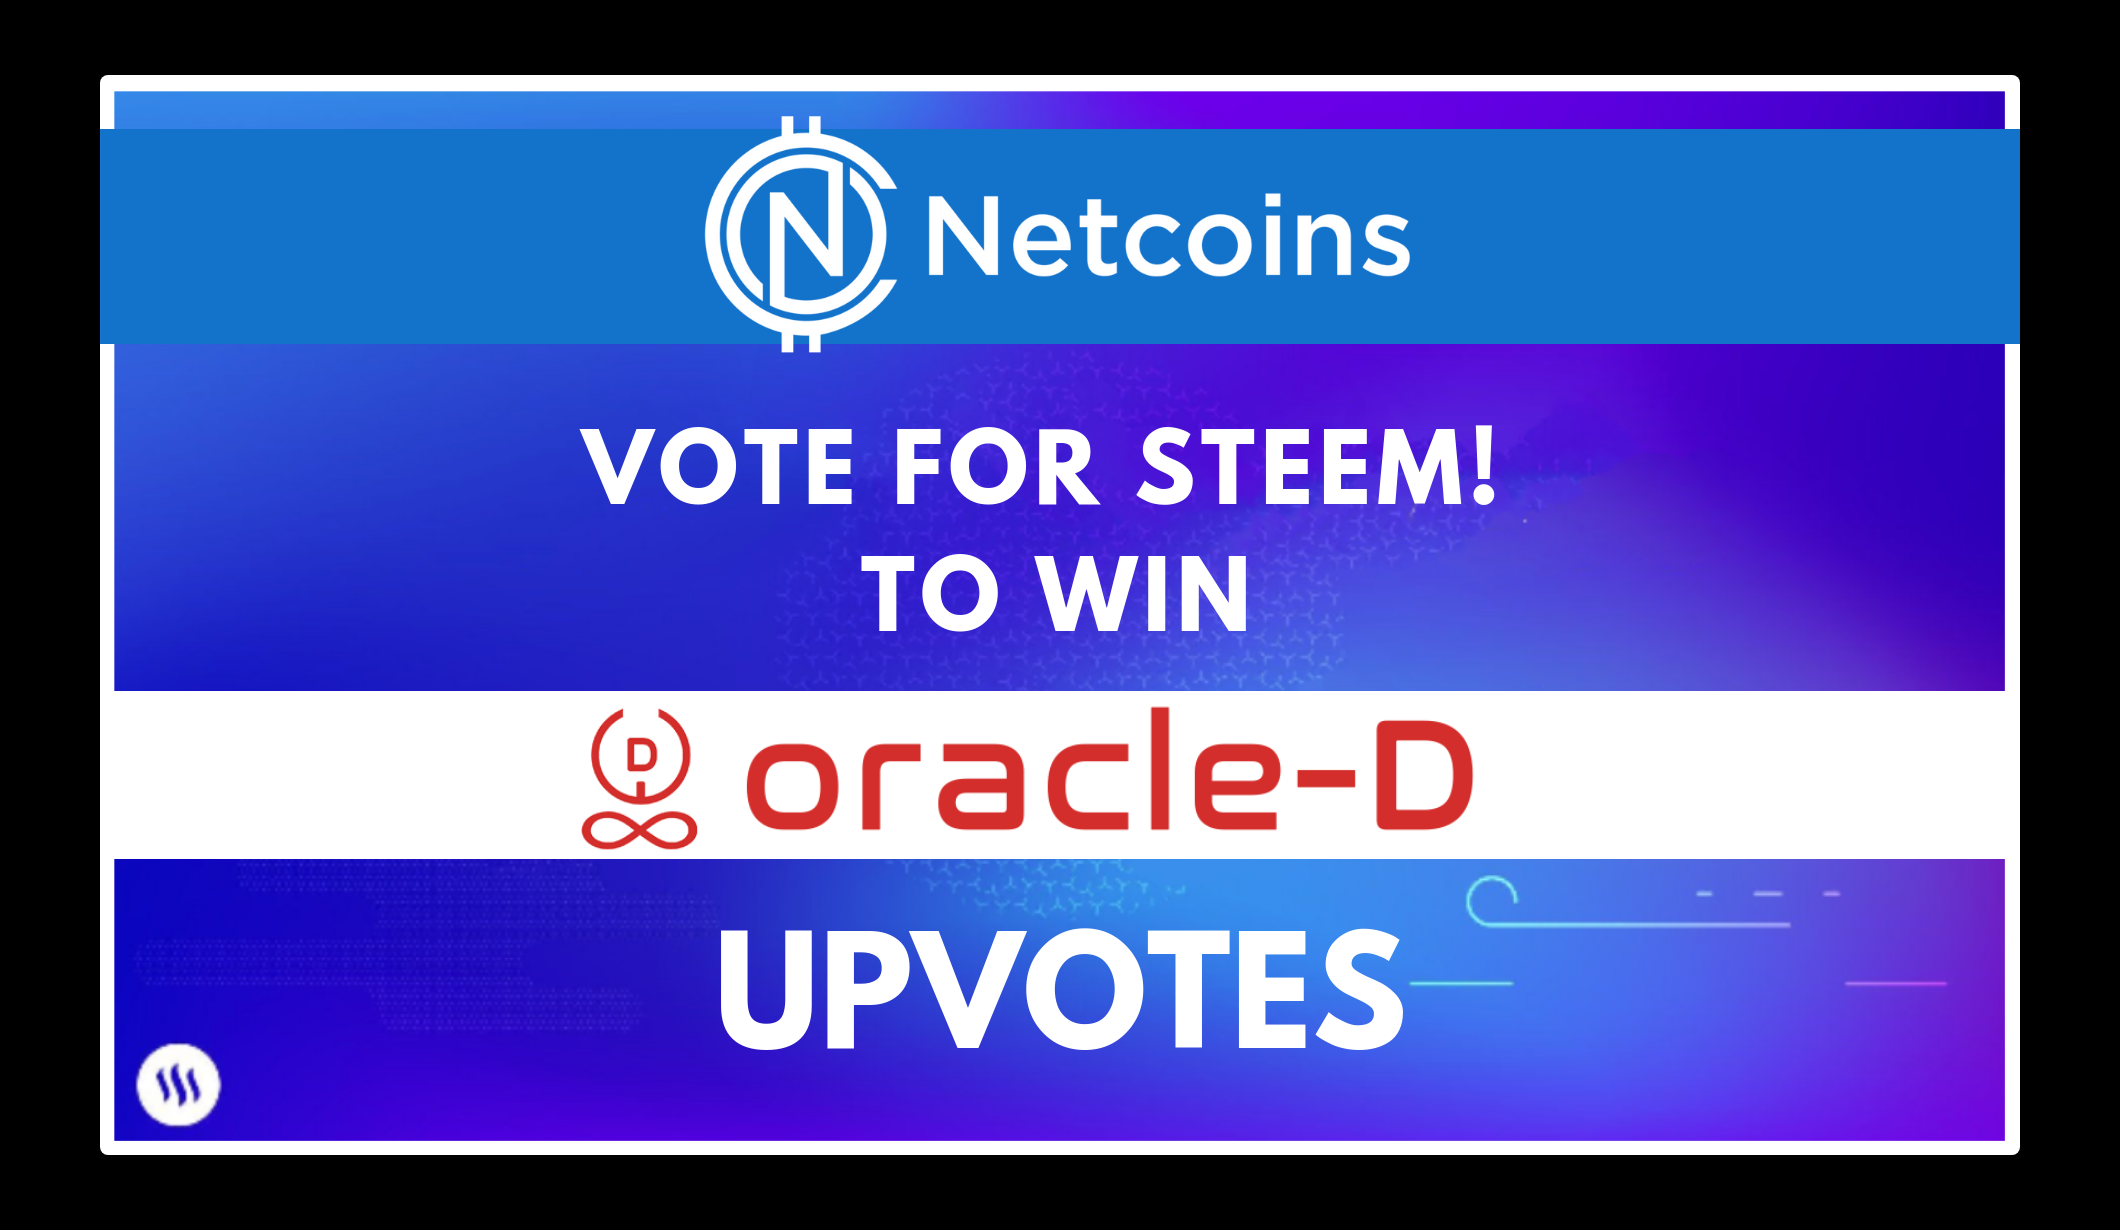 参加oracle-d 发起的STEEM上 NETCOINs投票活动